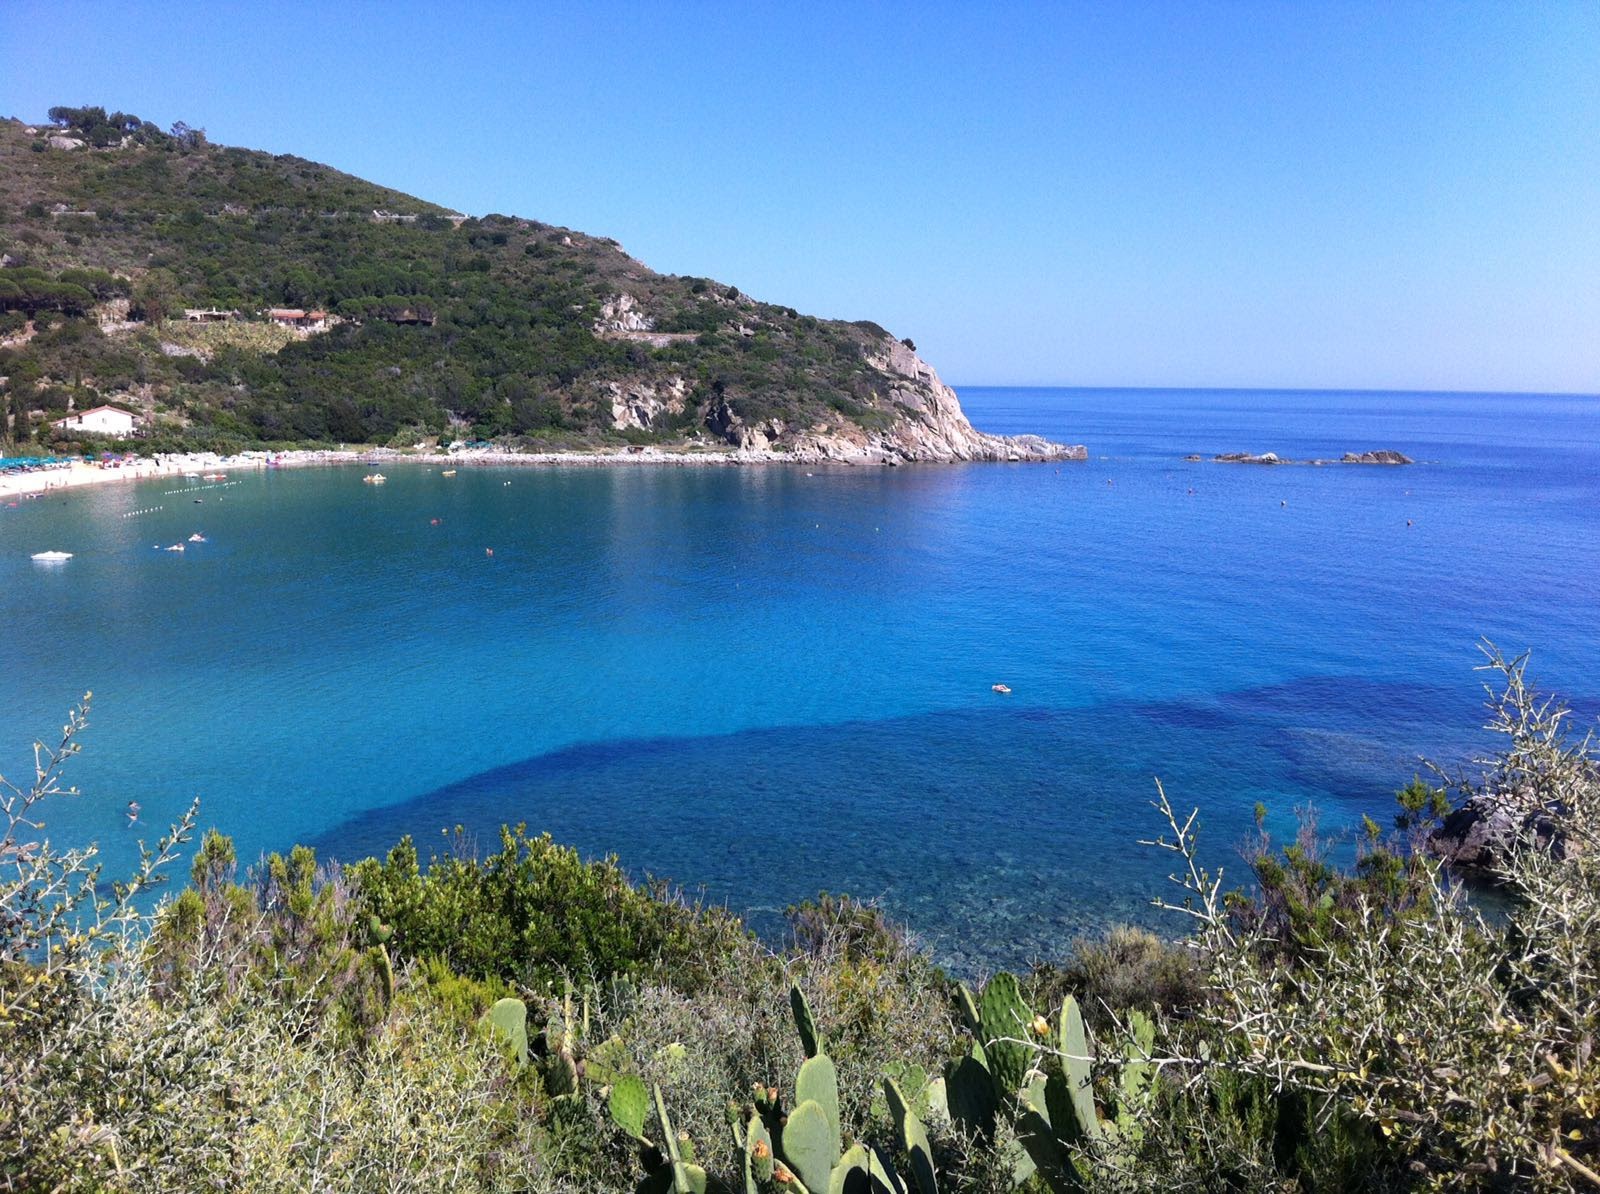 Strand von Fetovia - Insel Elba